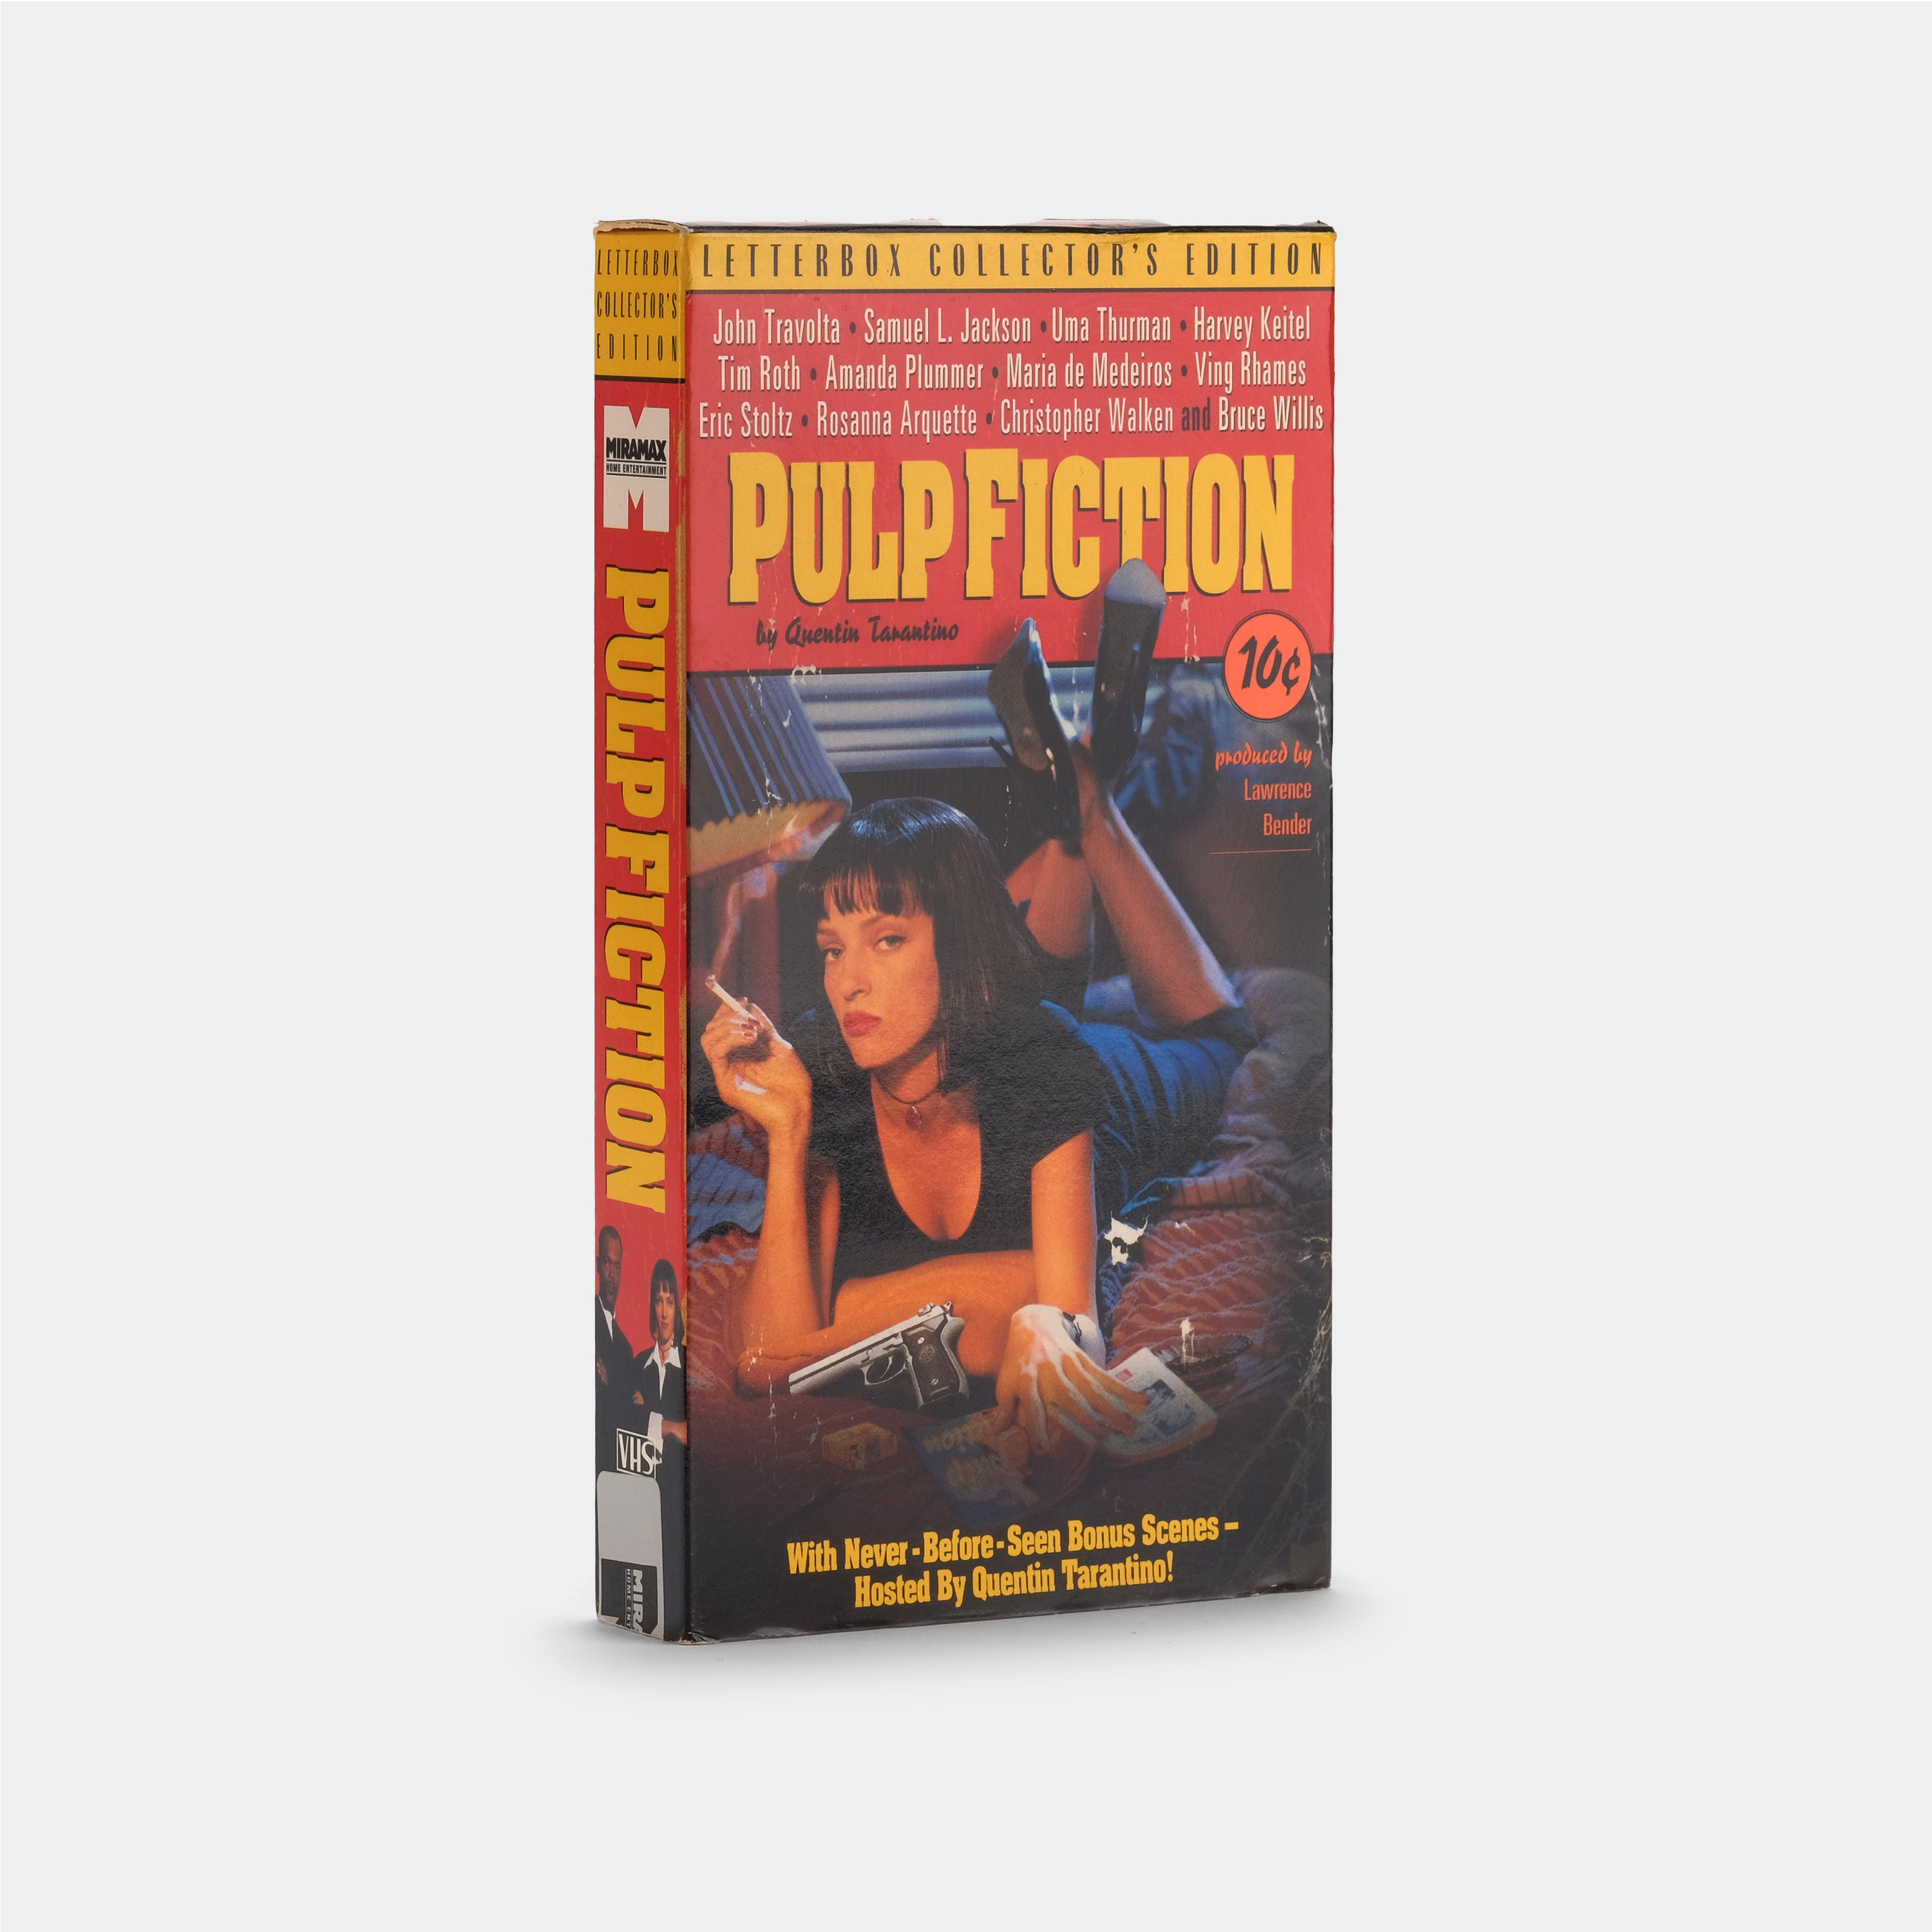 Pulp Fiction VHS Tape